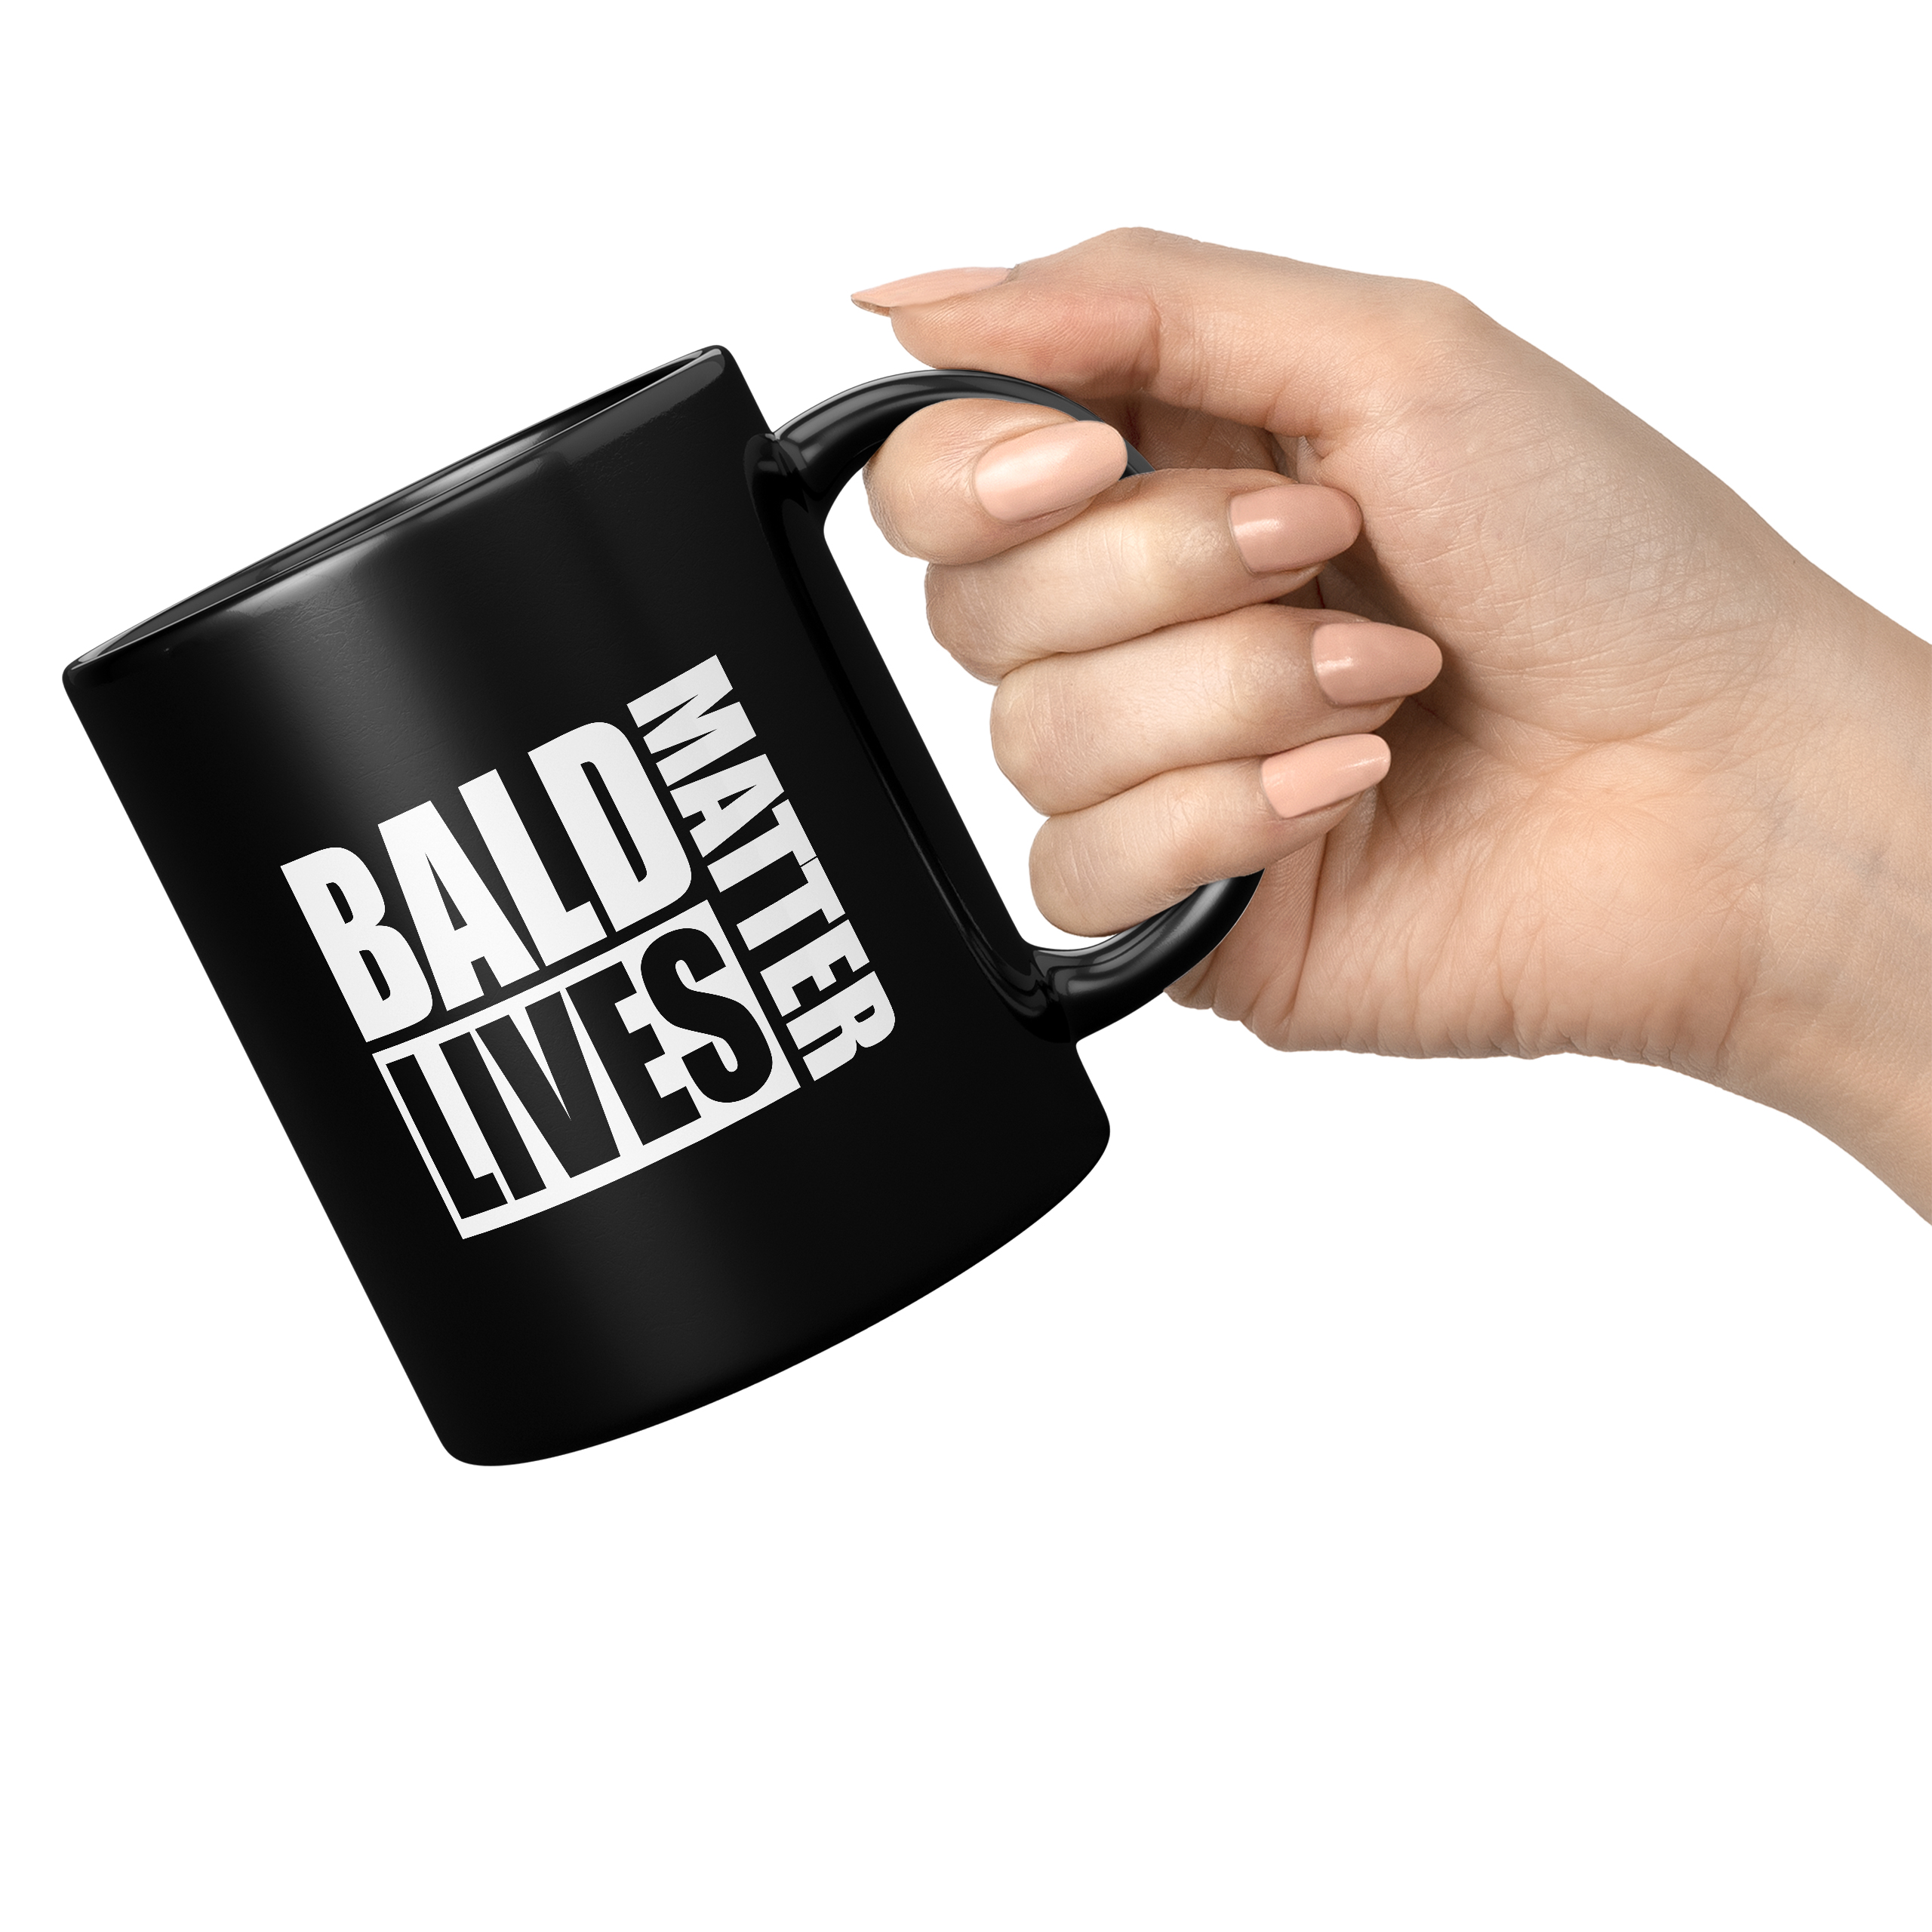 BALD LIVES MATTER 11oz NOVELTY MUG Mugs